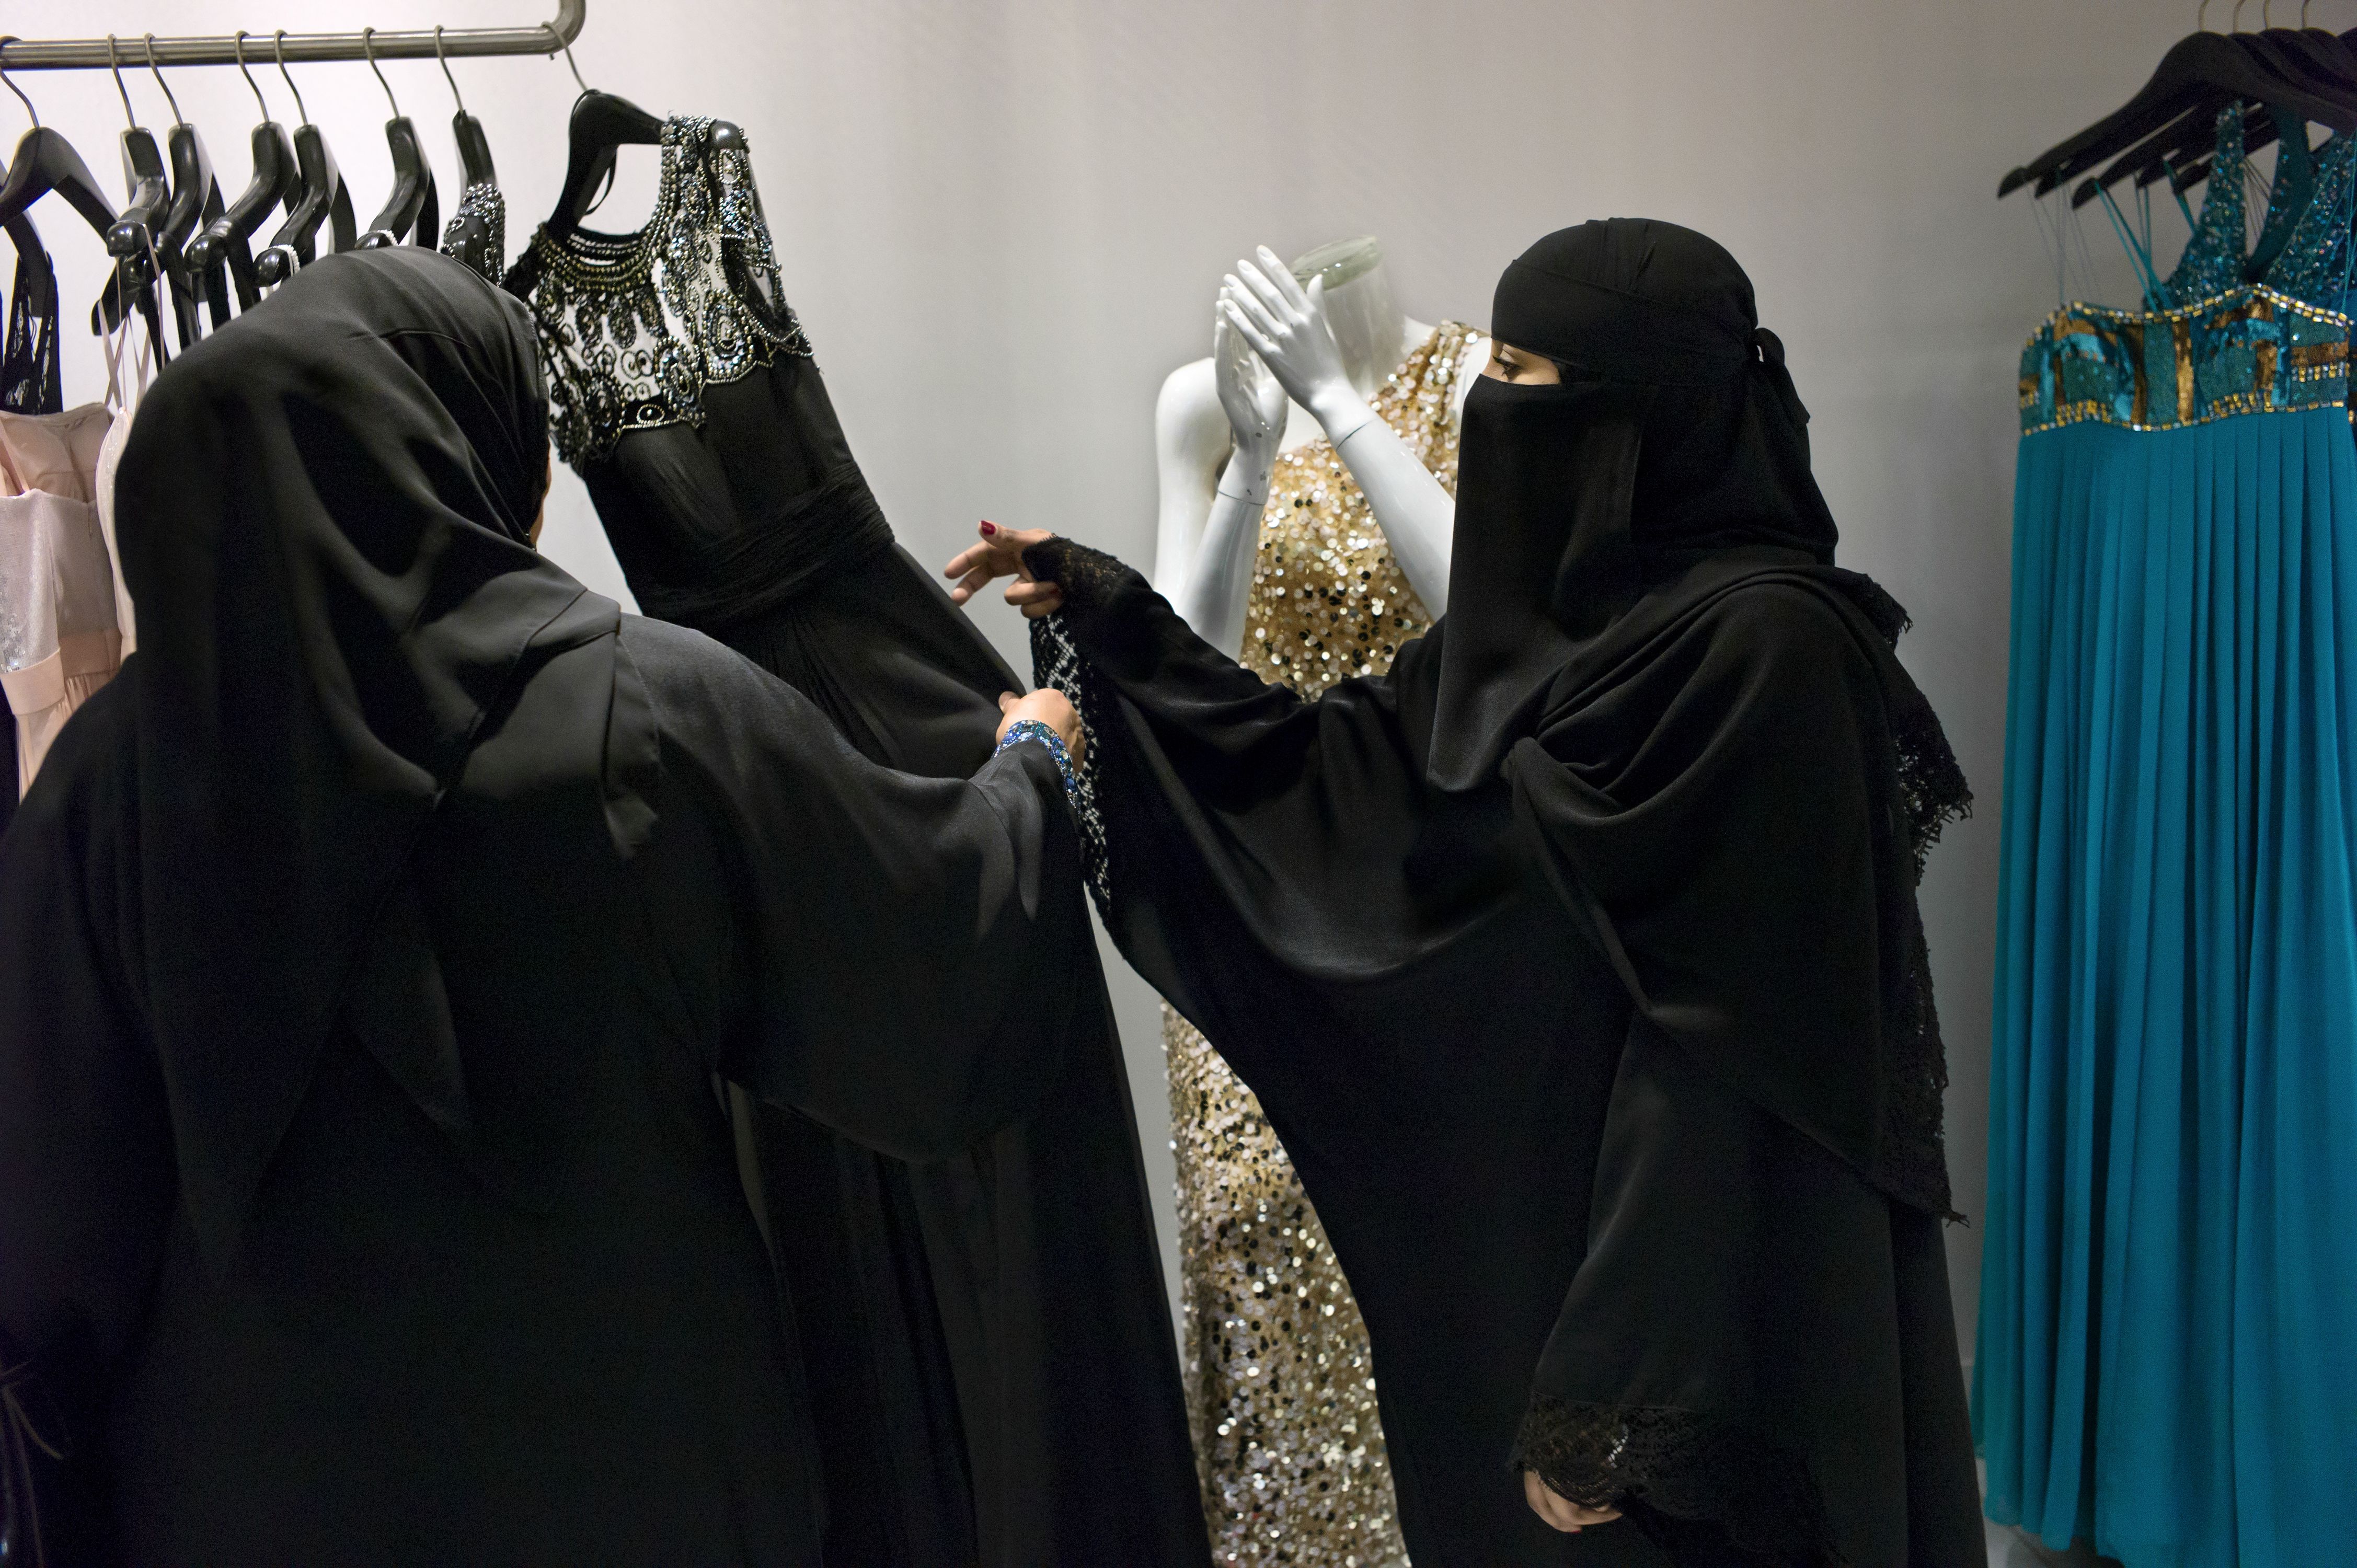 A Saudi employee helps a customer at a dress shop in Al Faisaliah Mall. Image by Kate Brooks. Saudi Arabia, 2013.